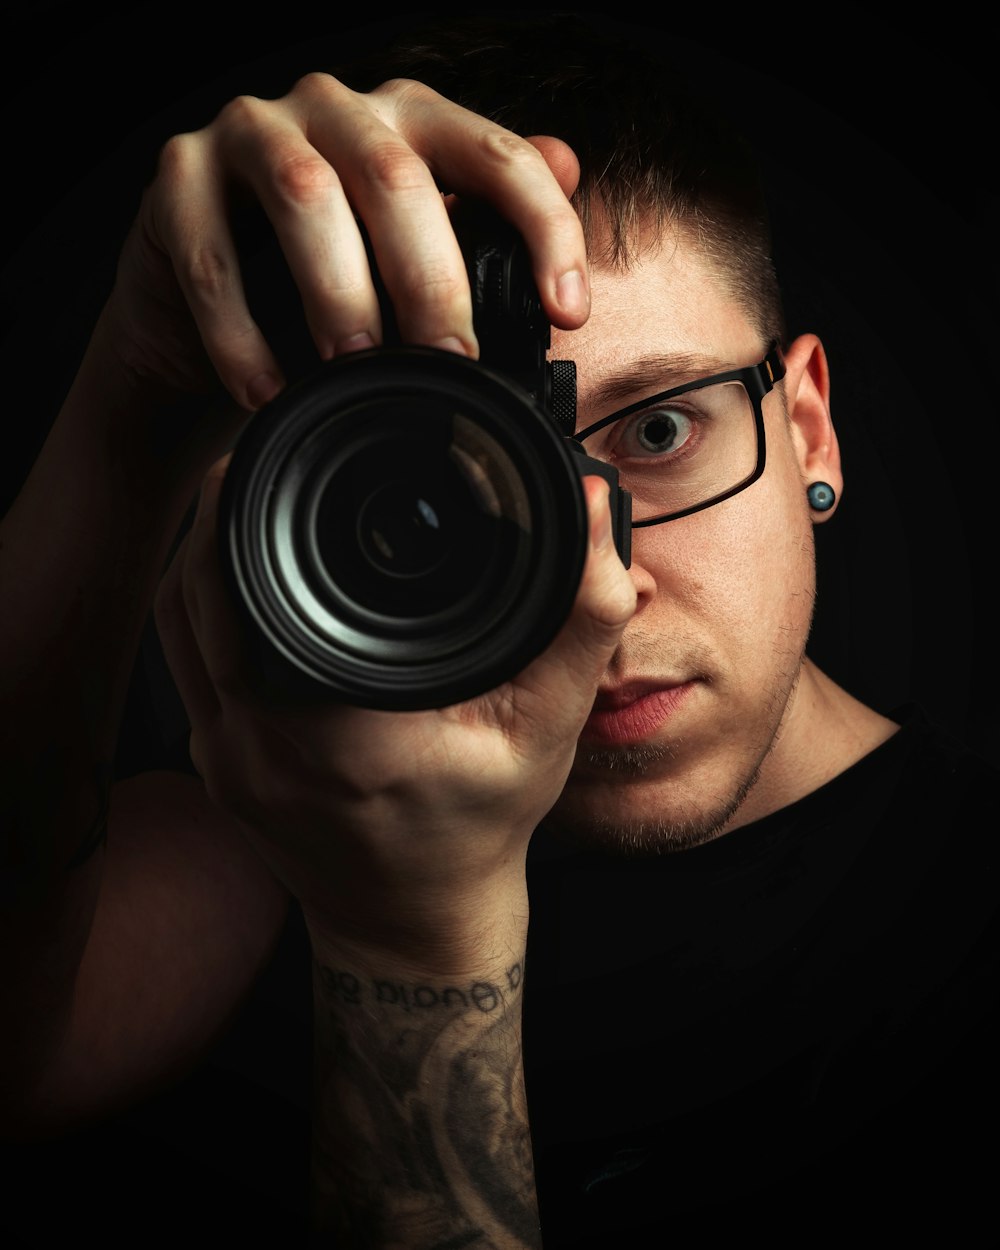 man in black shirt holding black camera lens